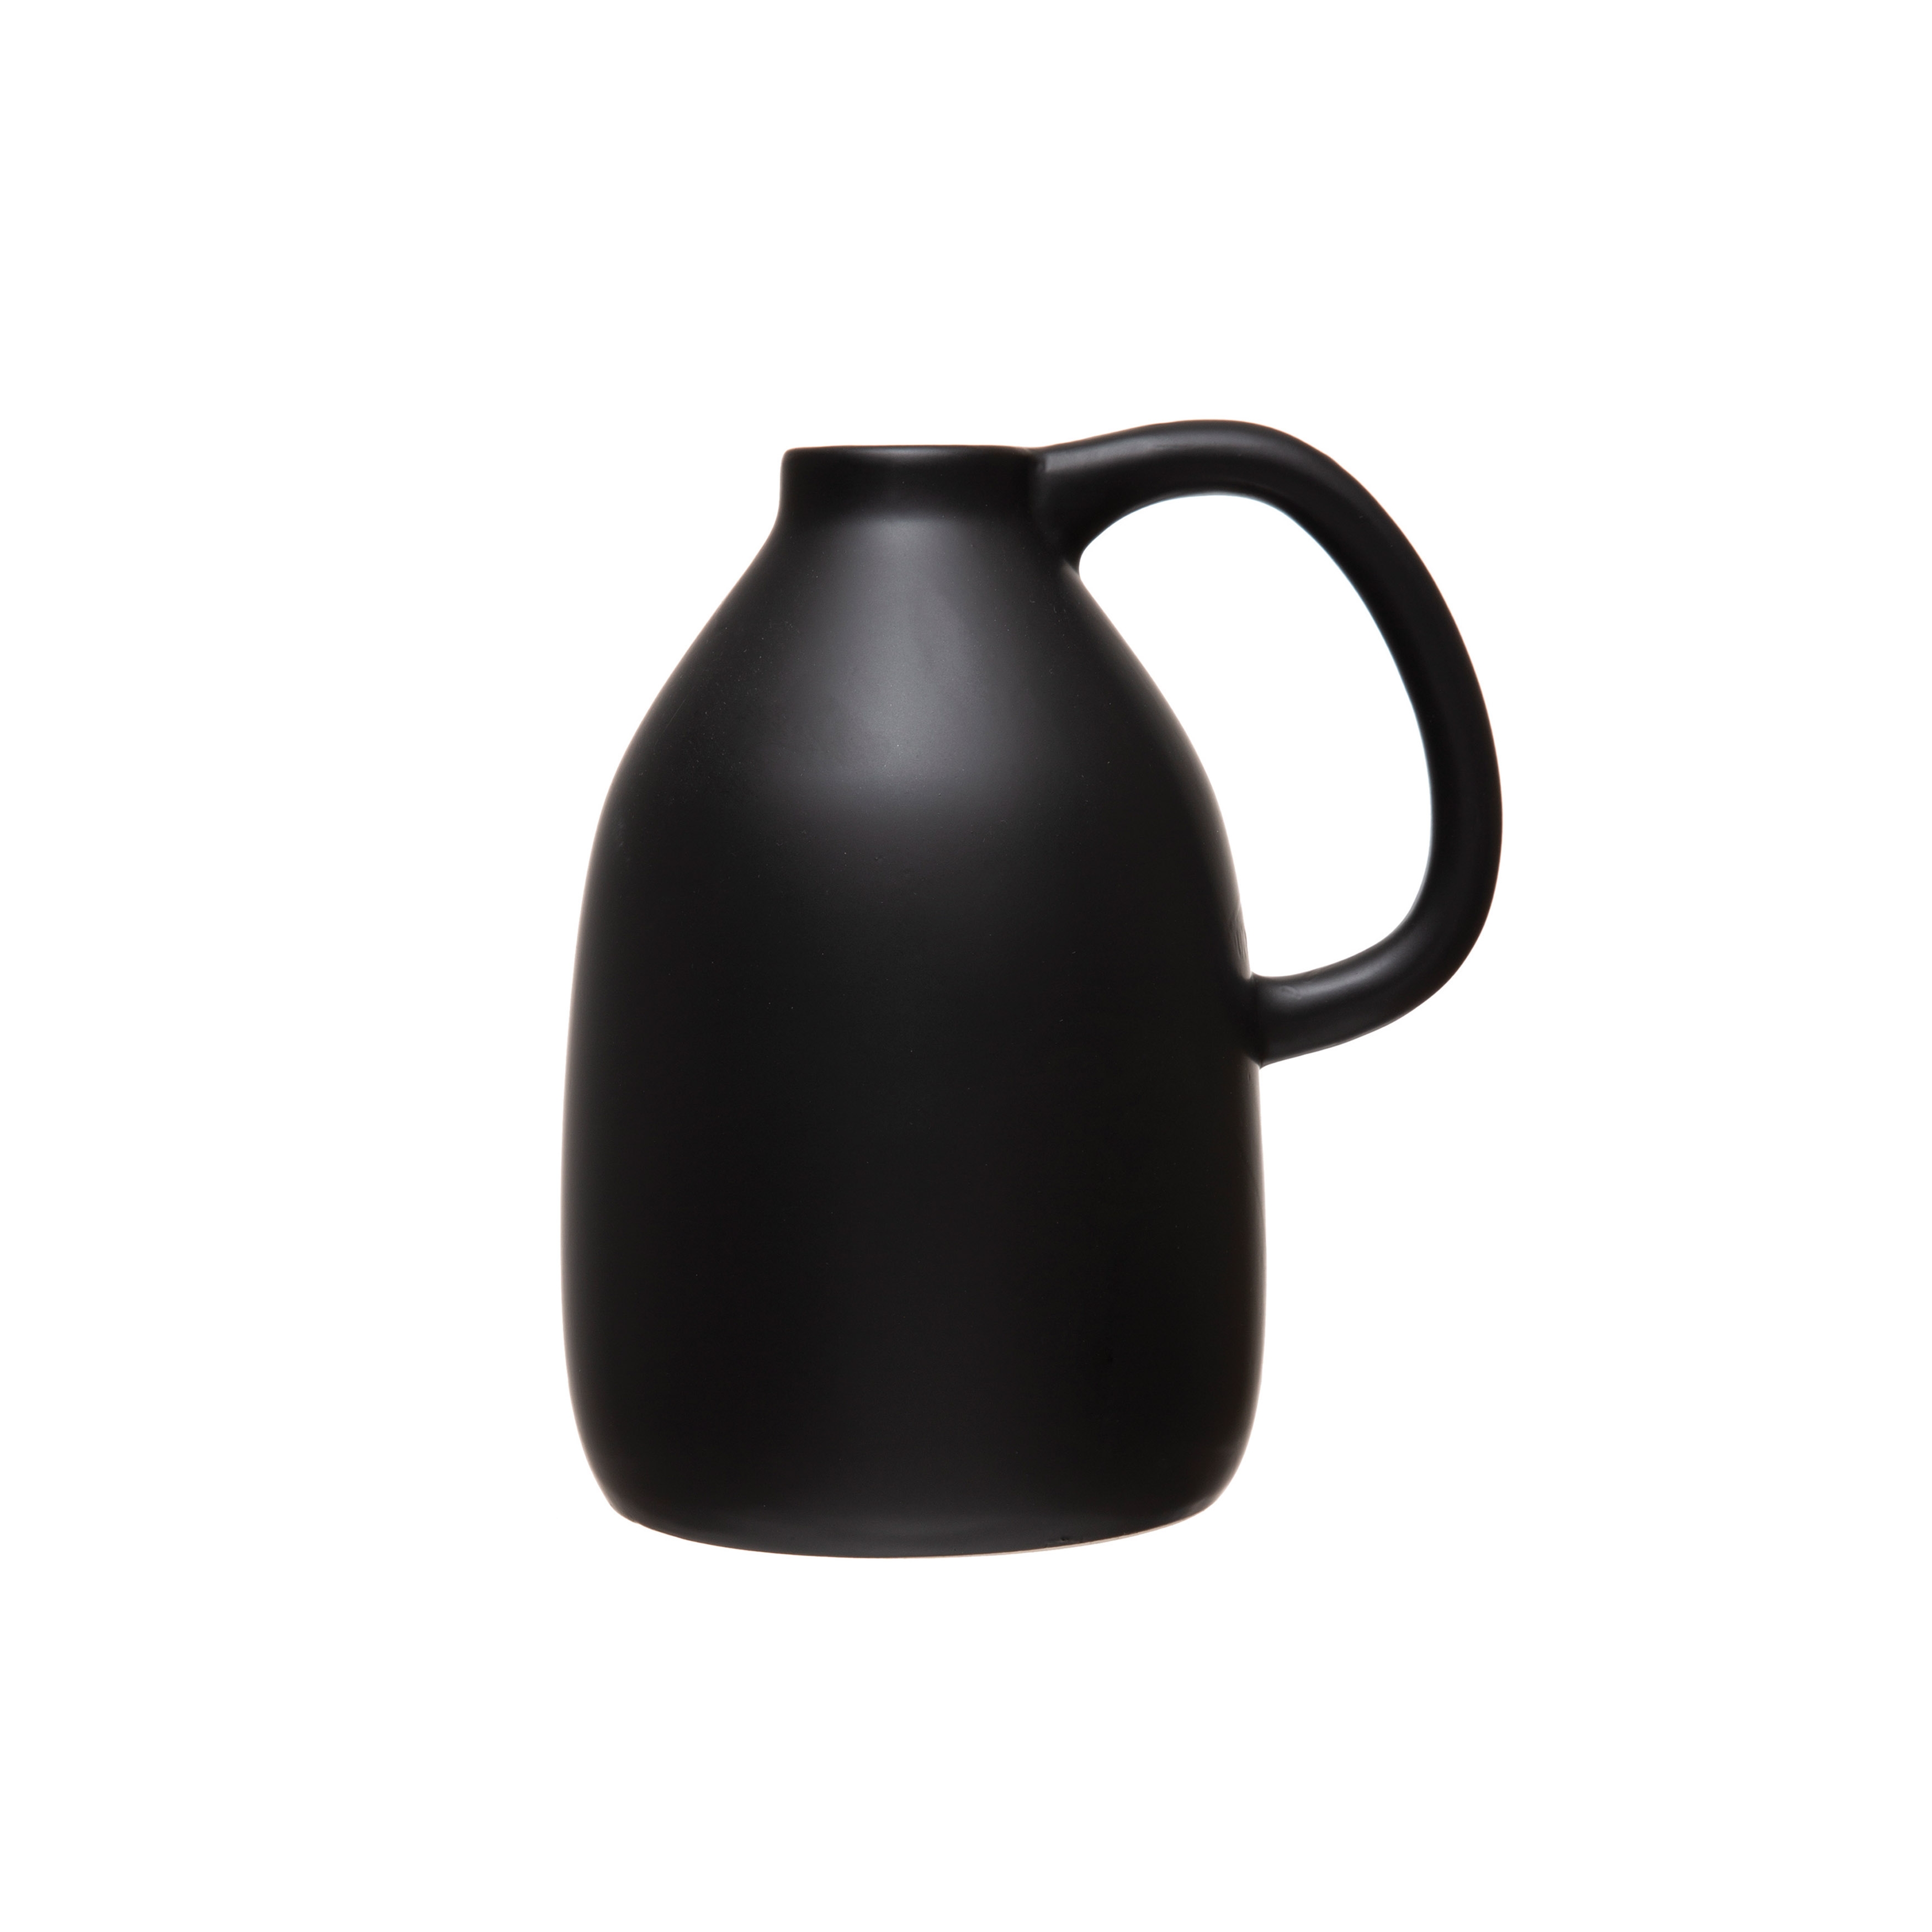 Ceramic Vase with Handle, Matte Black - Image 0